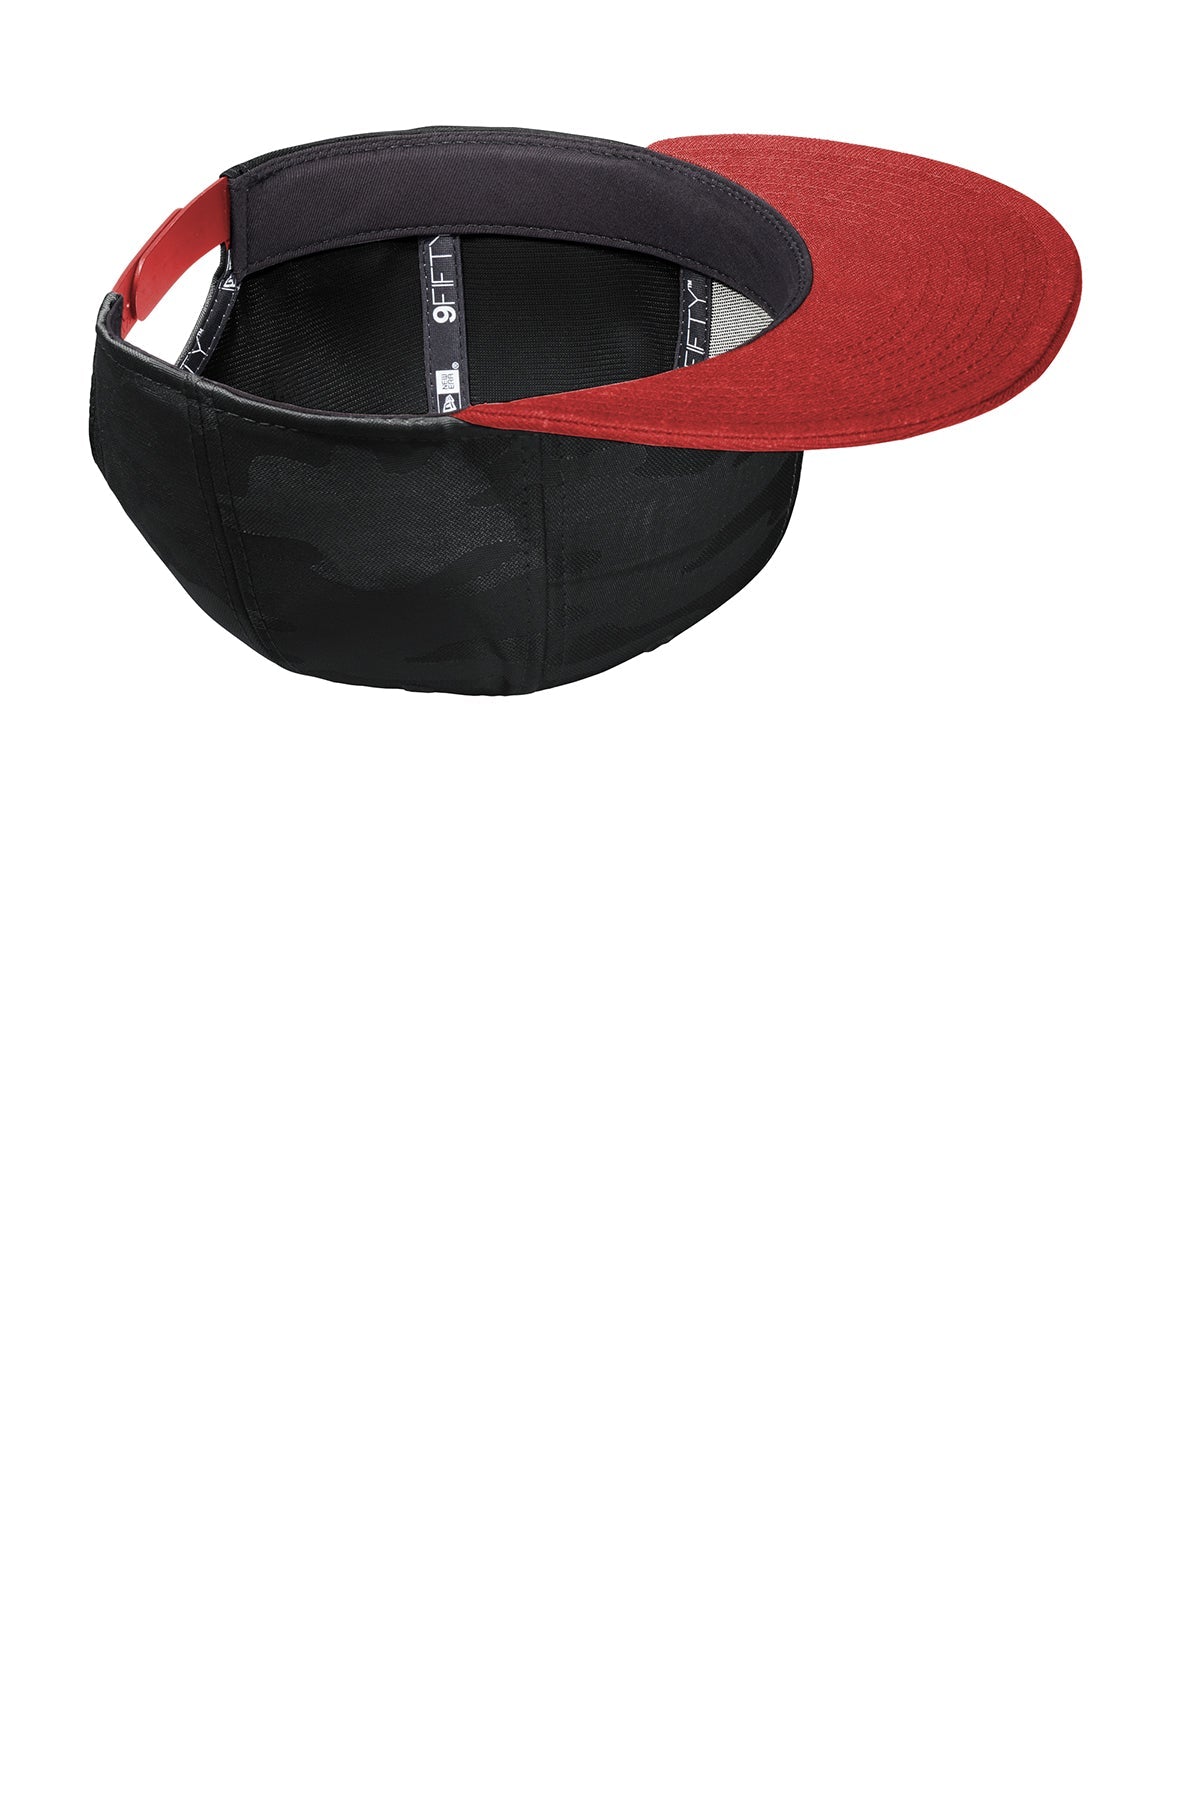 New Era Camo Flat Bill Snapback Custom Caps, Scarlet/ Black Camo